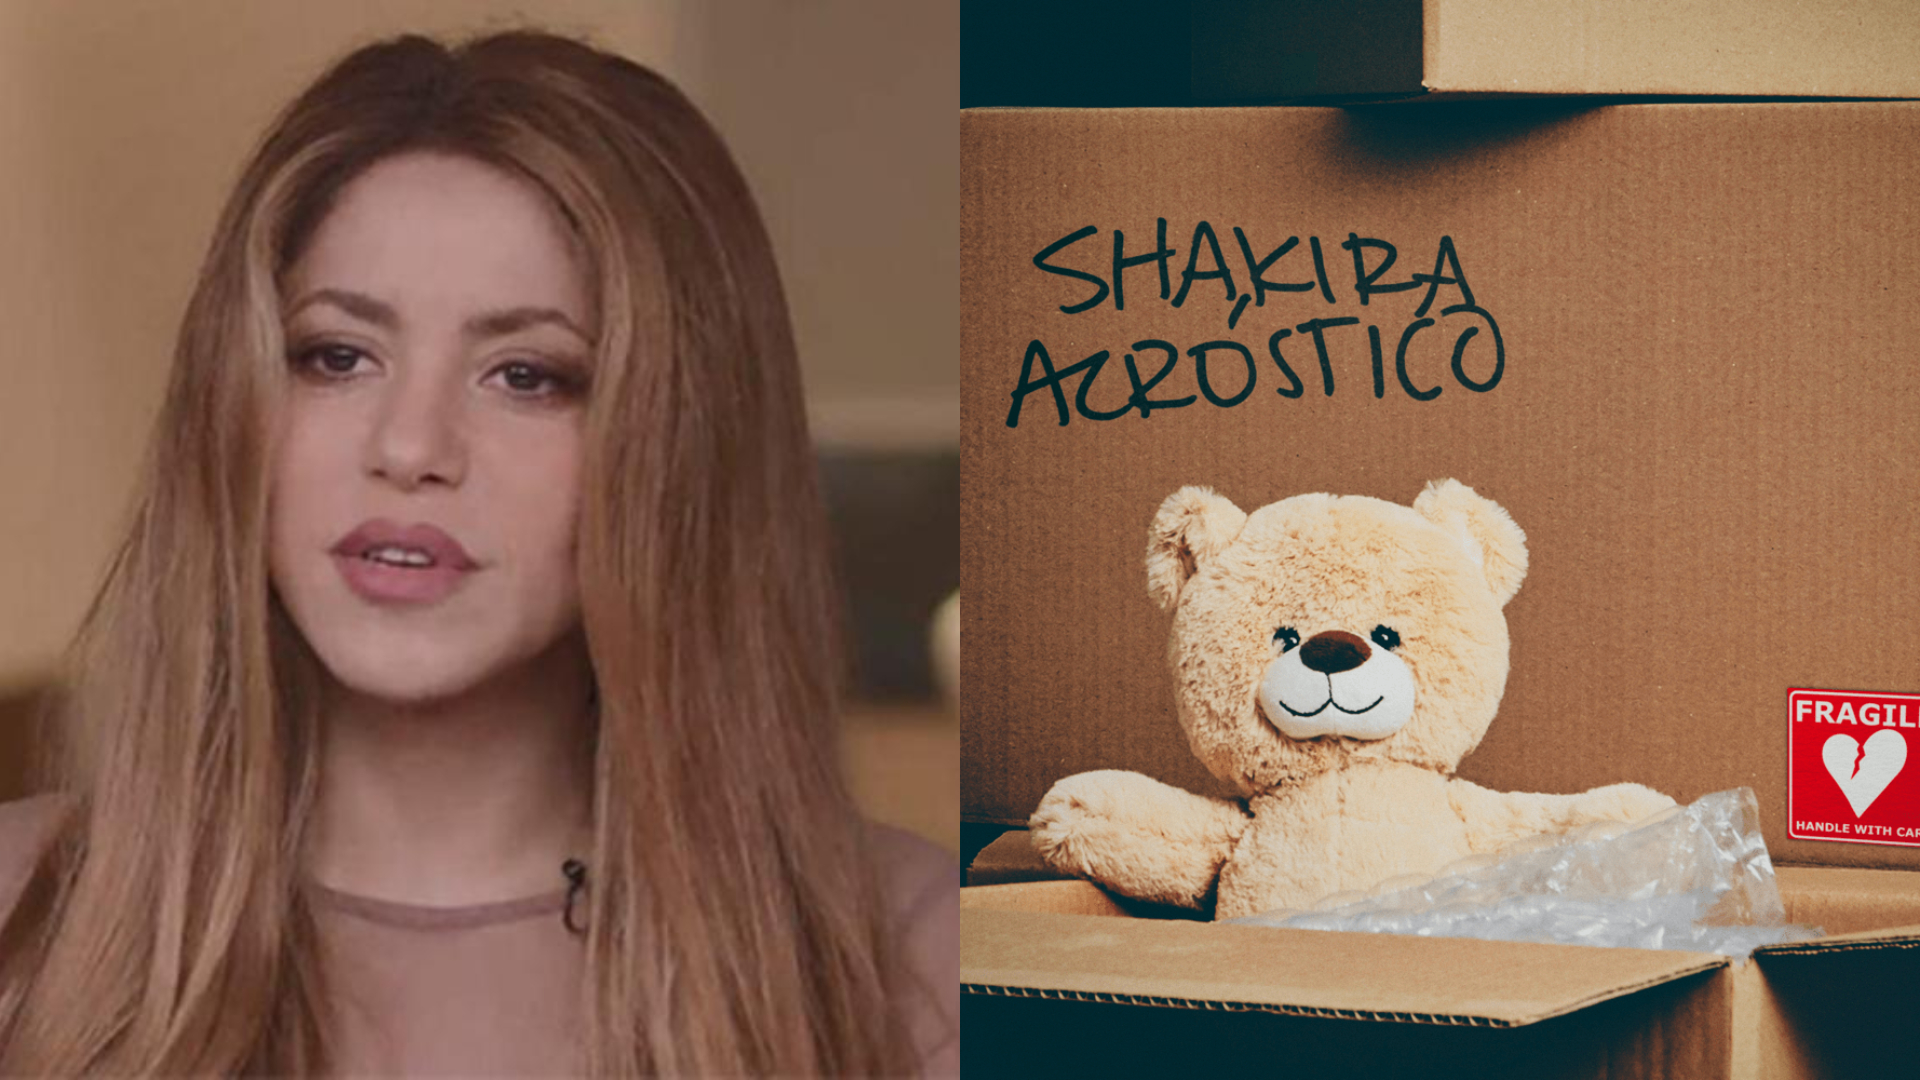 Shakira acrostico